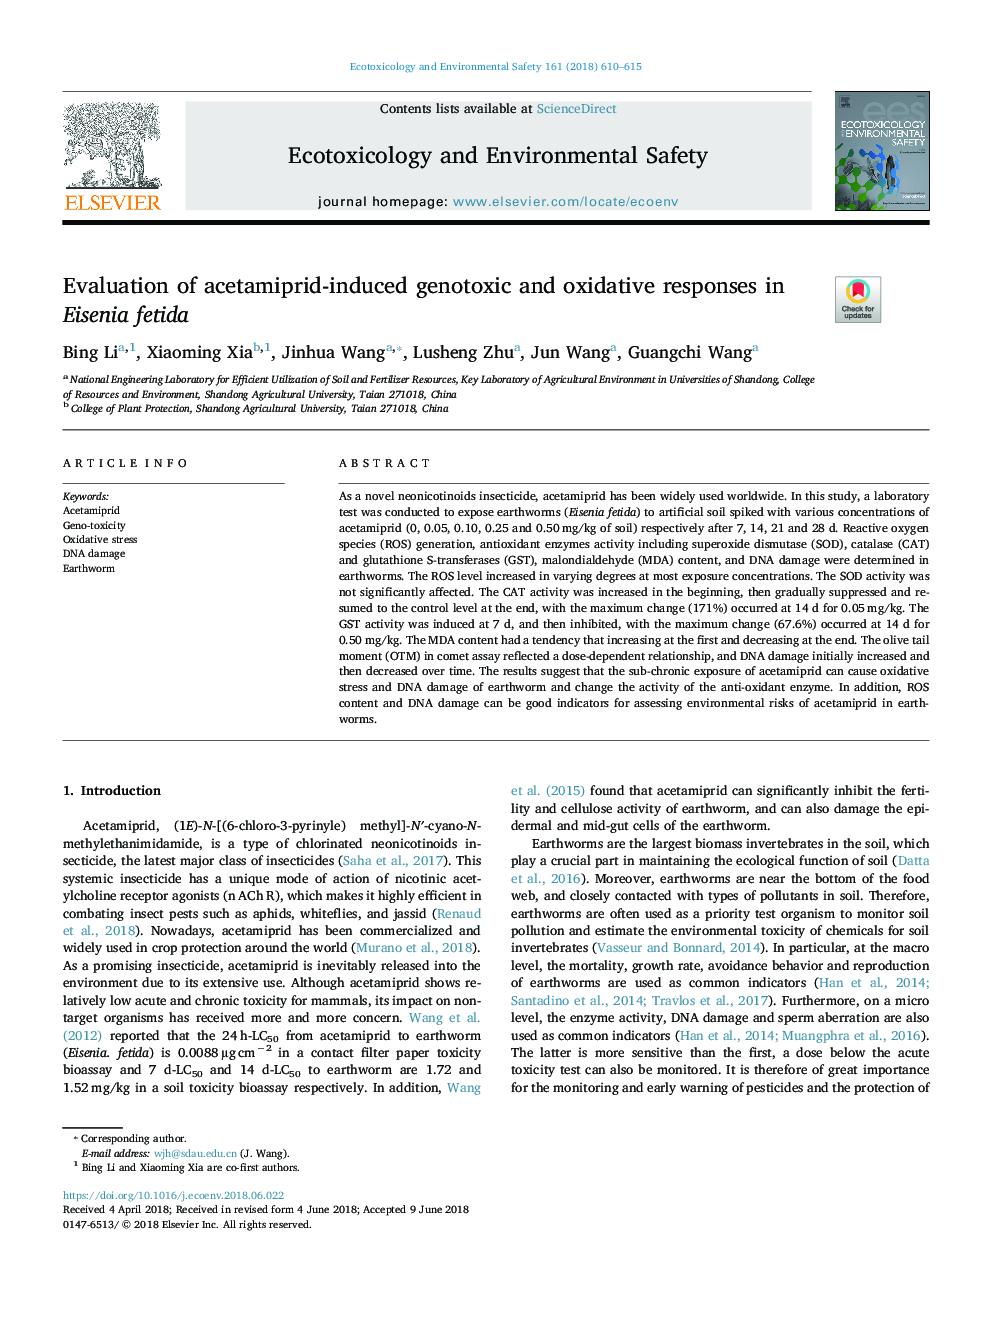 Evaluation of acetamiprid-induced genotoxic and oxidative responses in Eisenia fetida